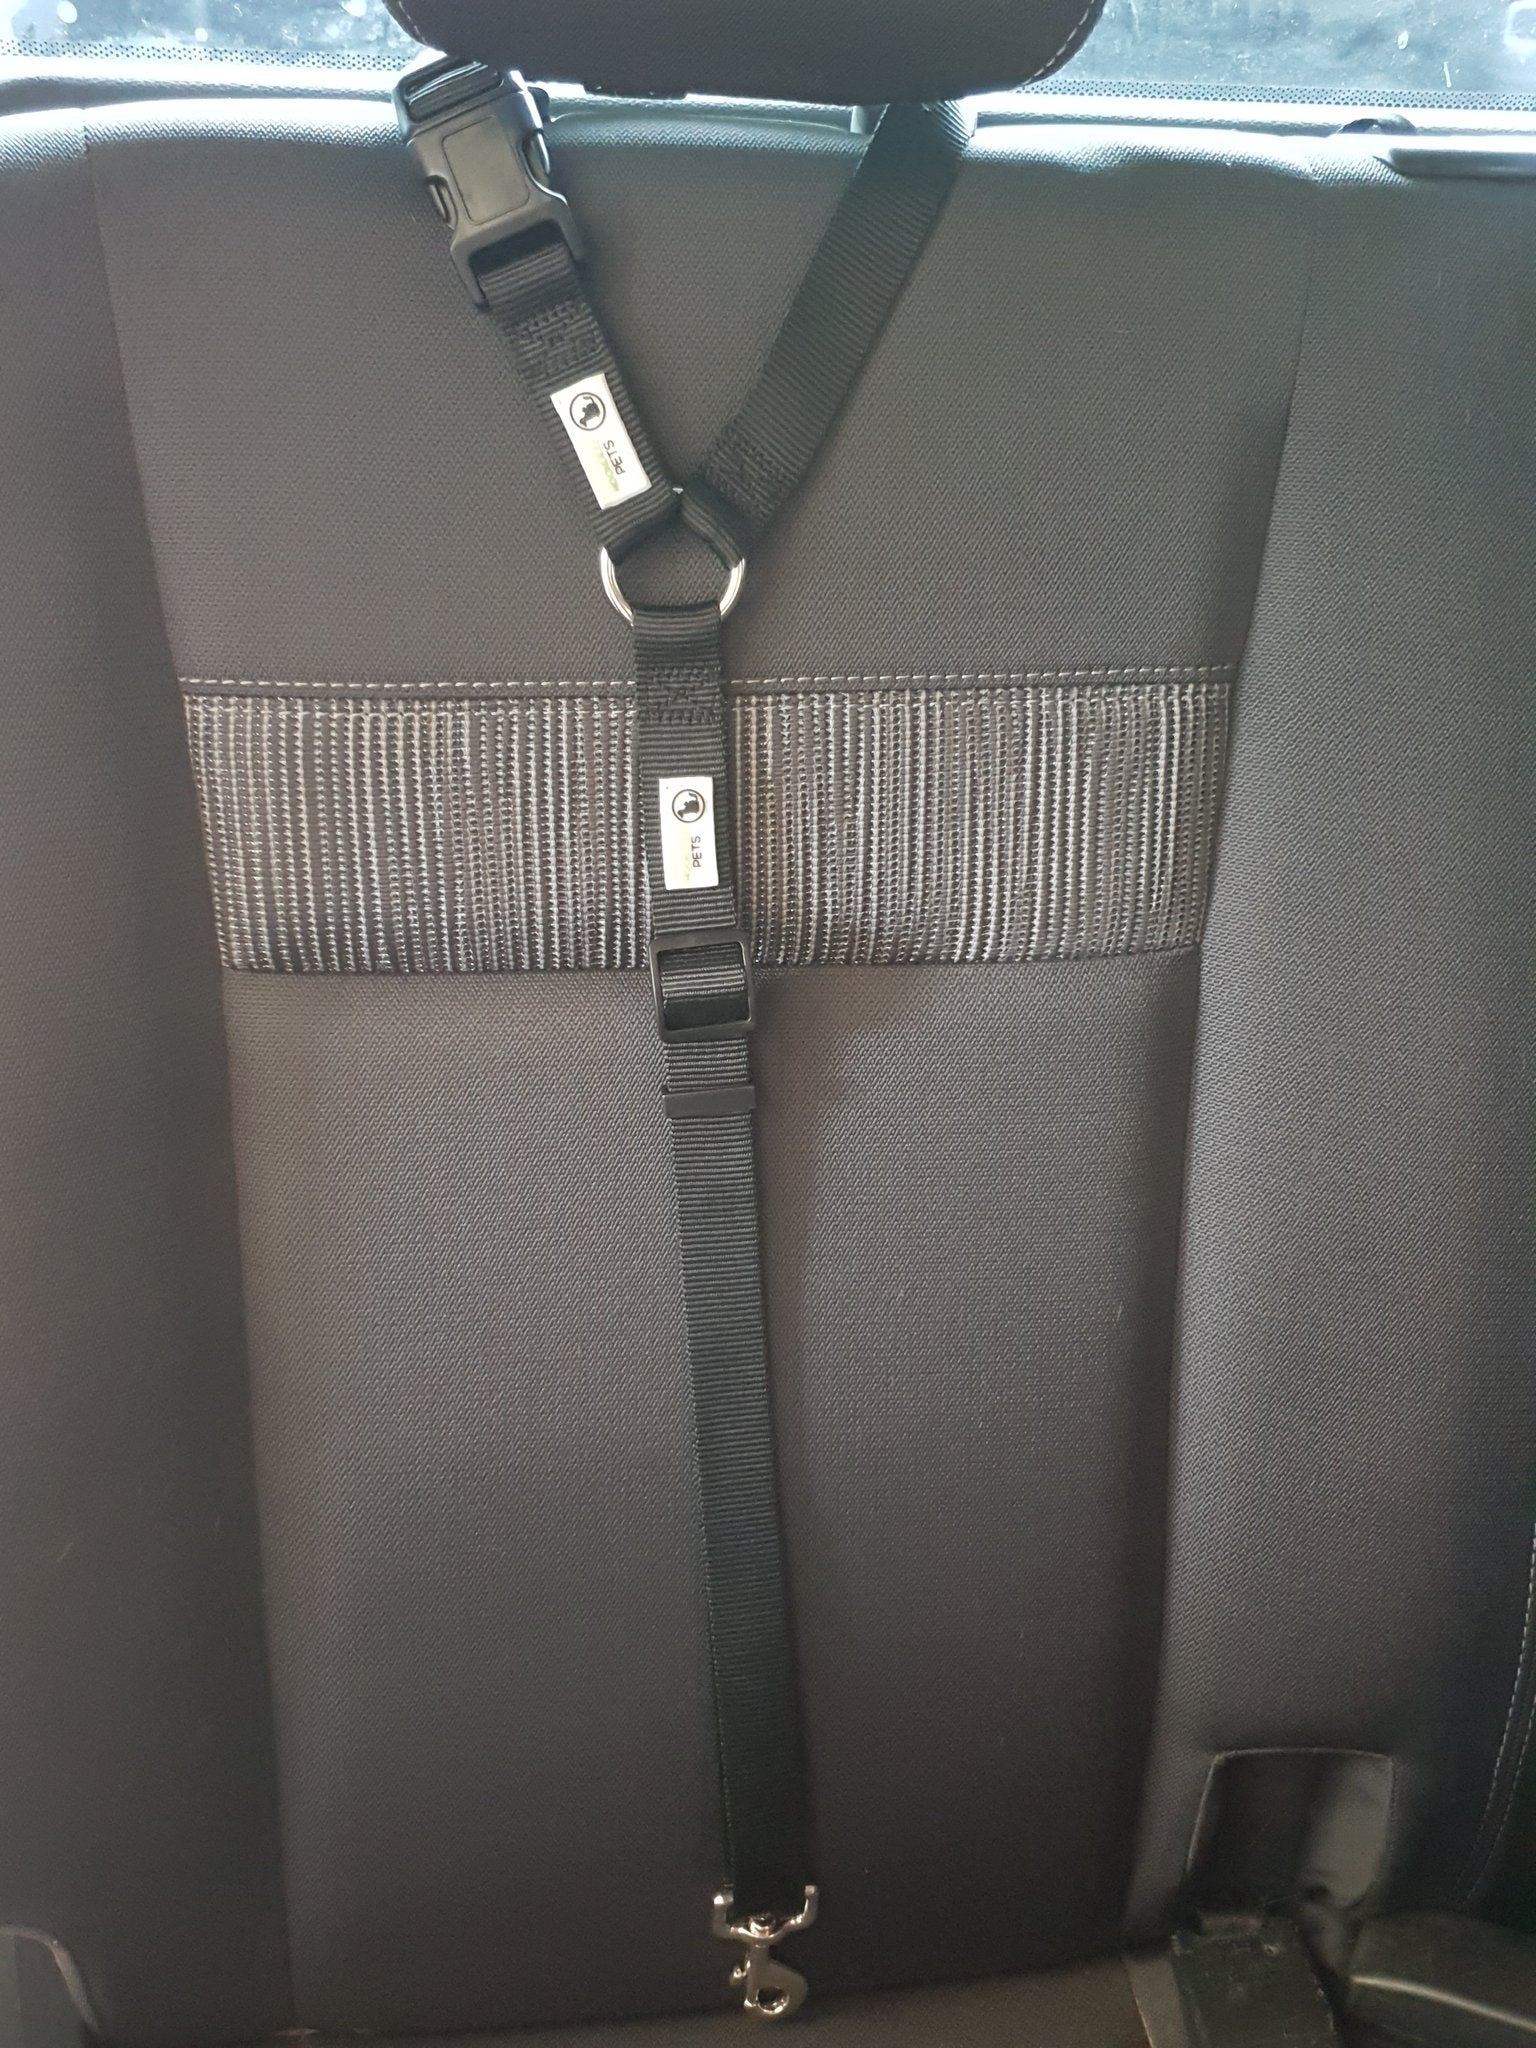 Headrest Seatbelt Restraint